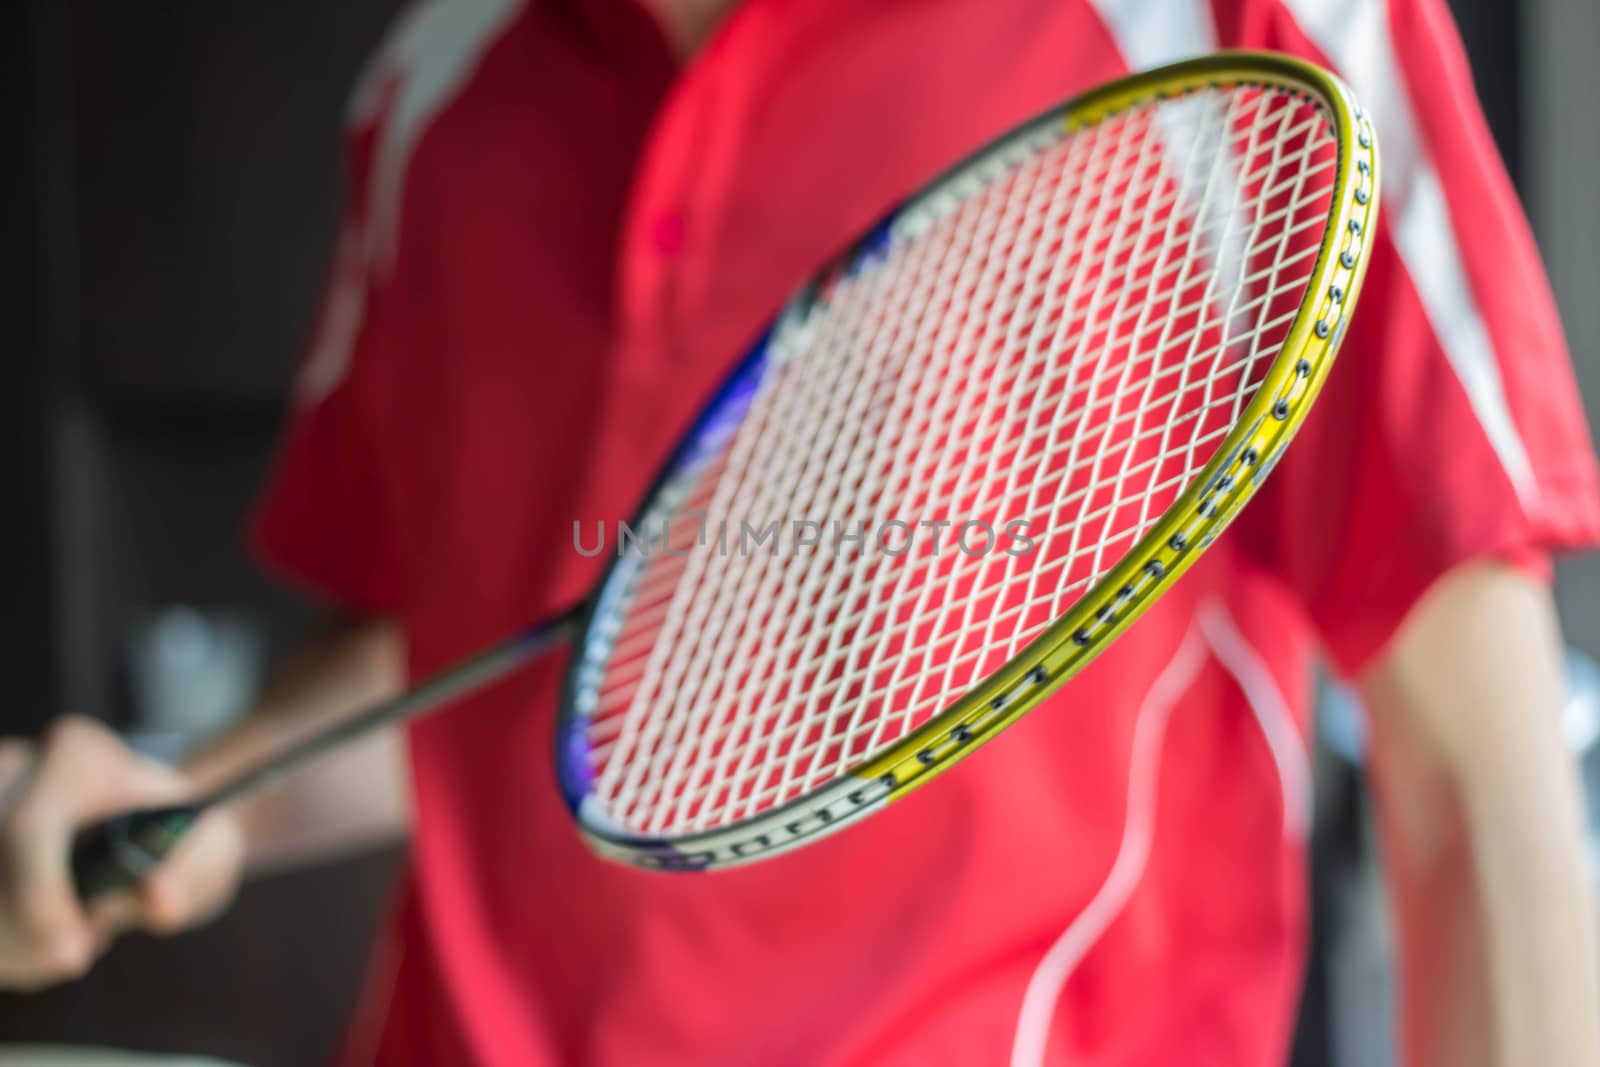 Badminton Racket Holding Technique